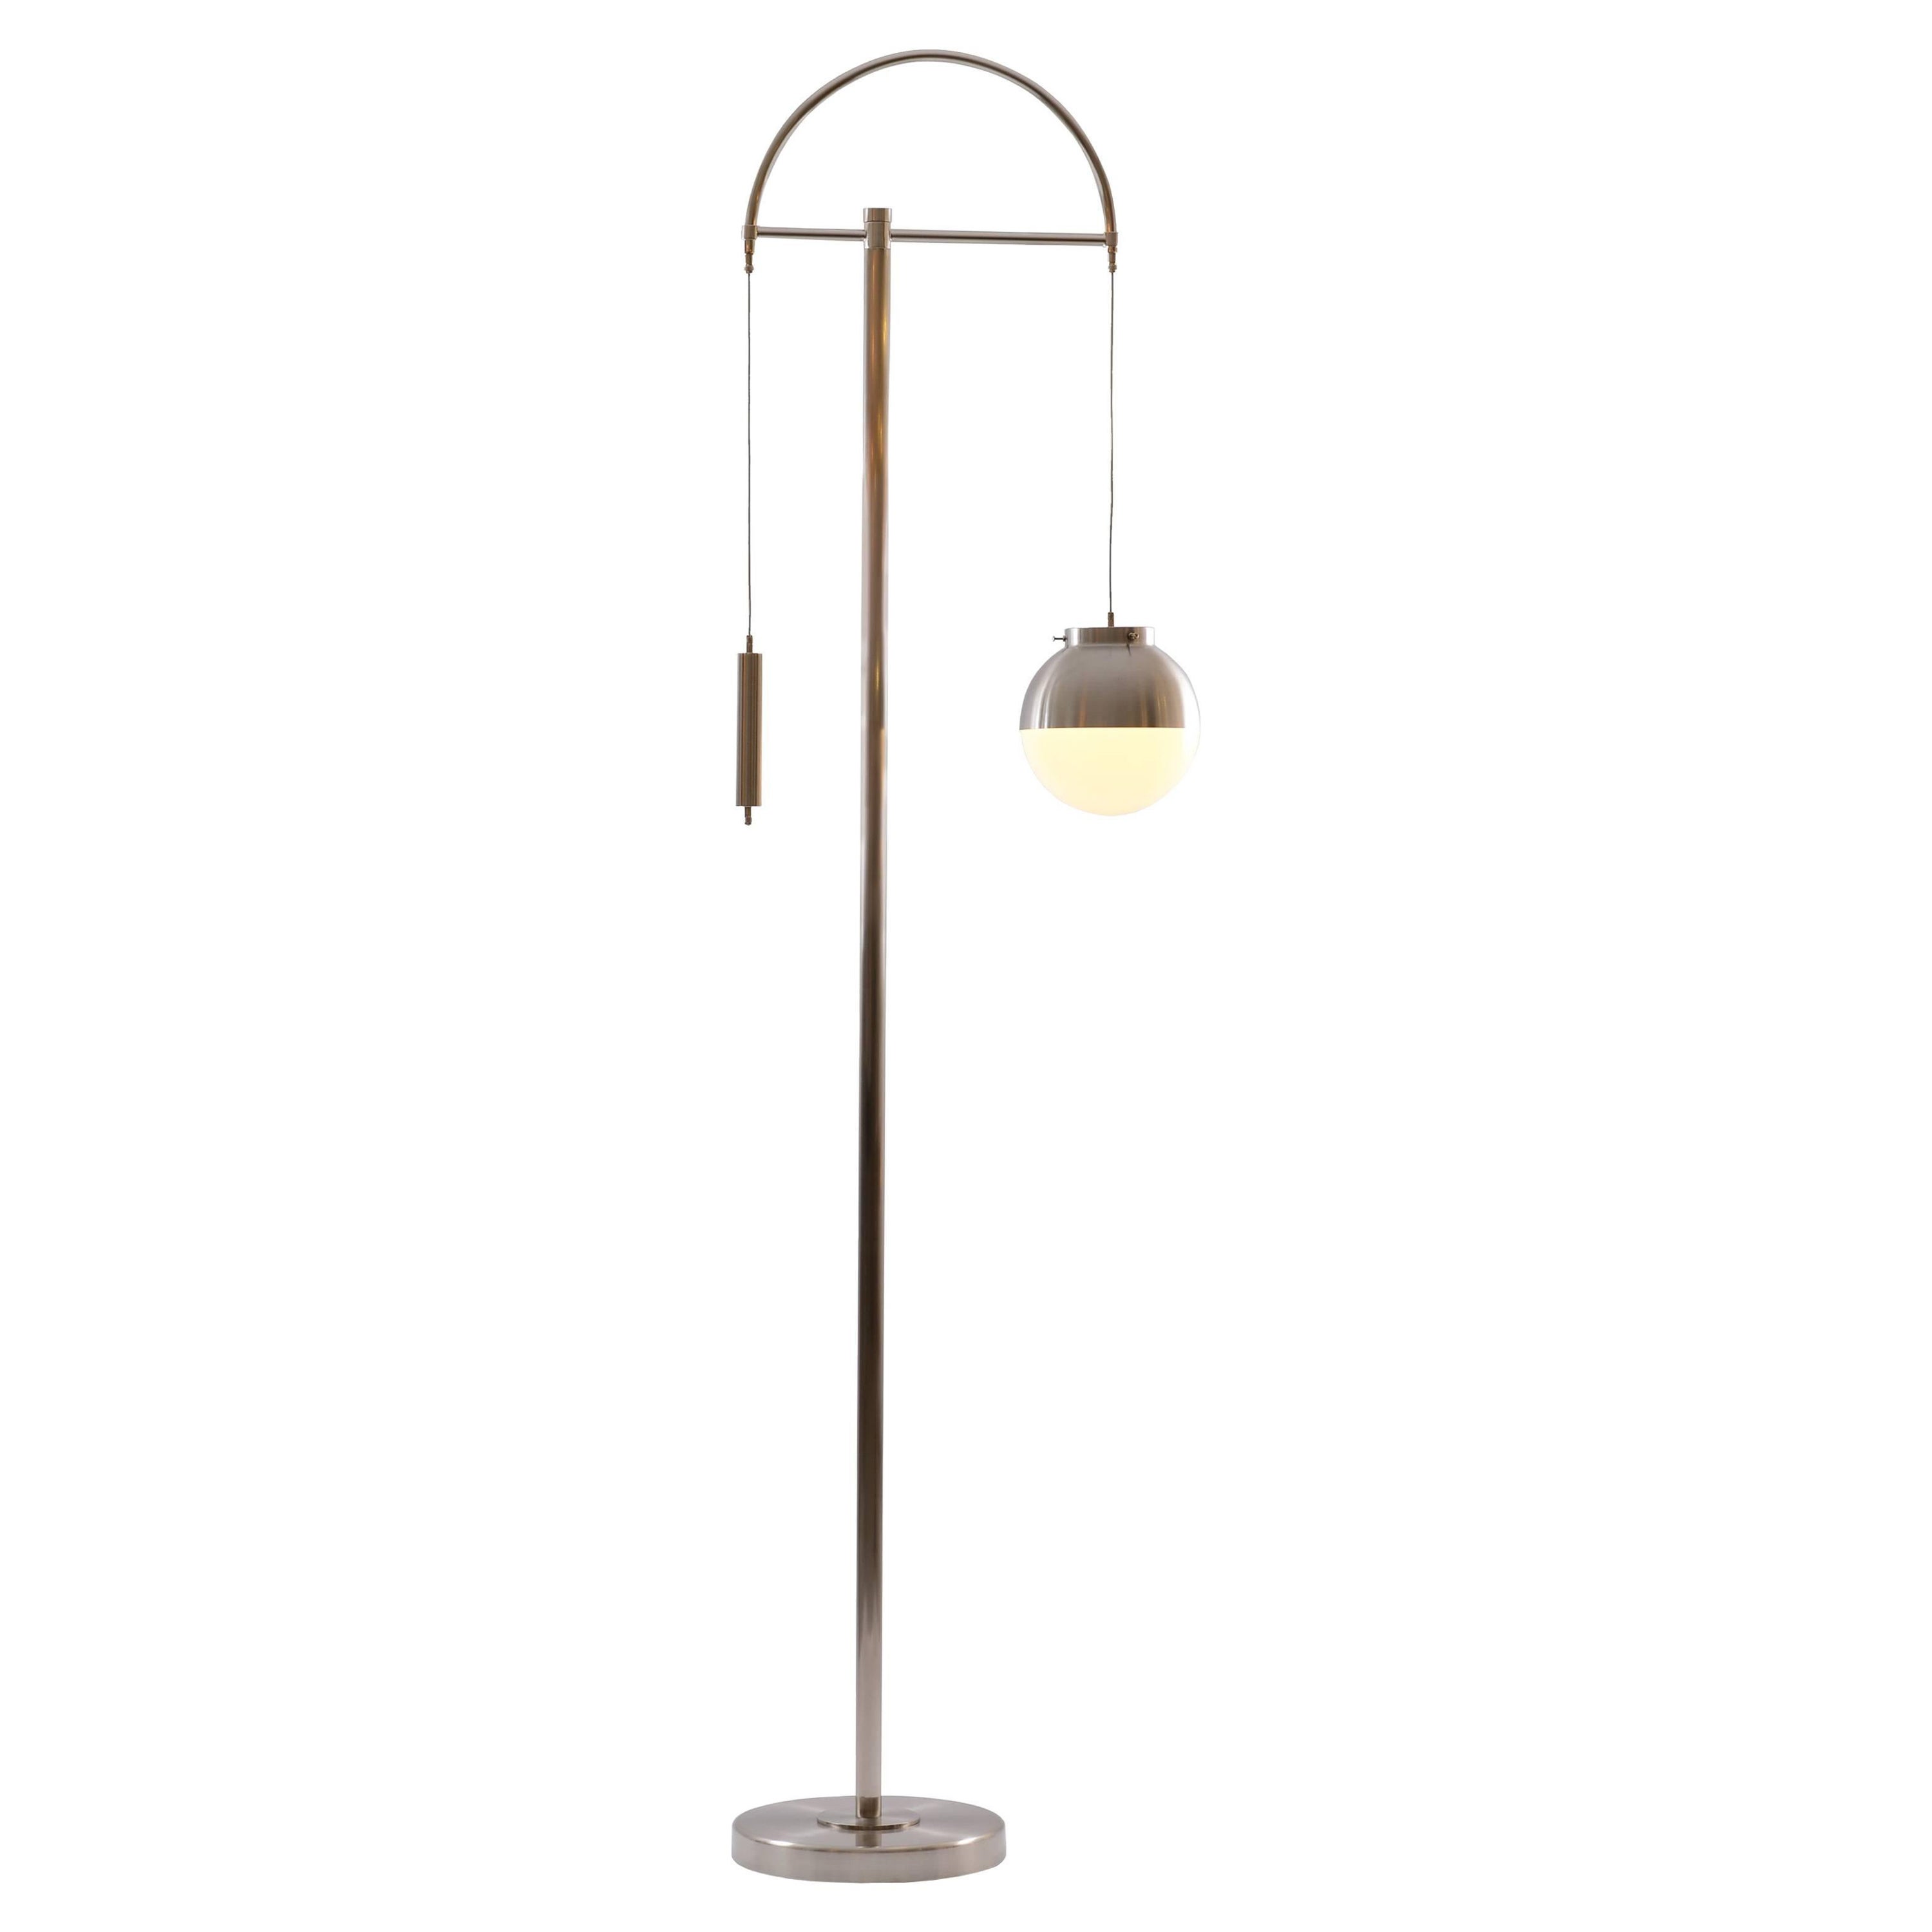 Art Deco, Art Nouveau Lift Floor Lamp Adjustable in Height, Re Edition For Sale